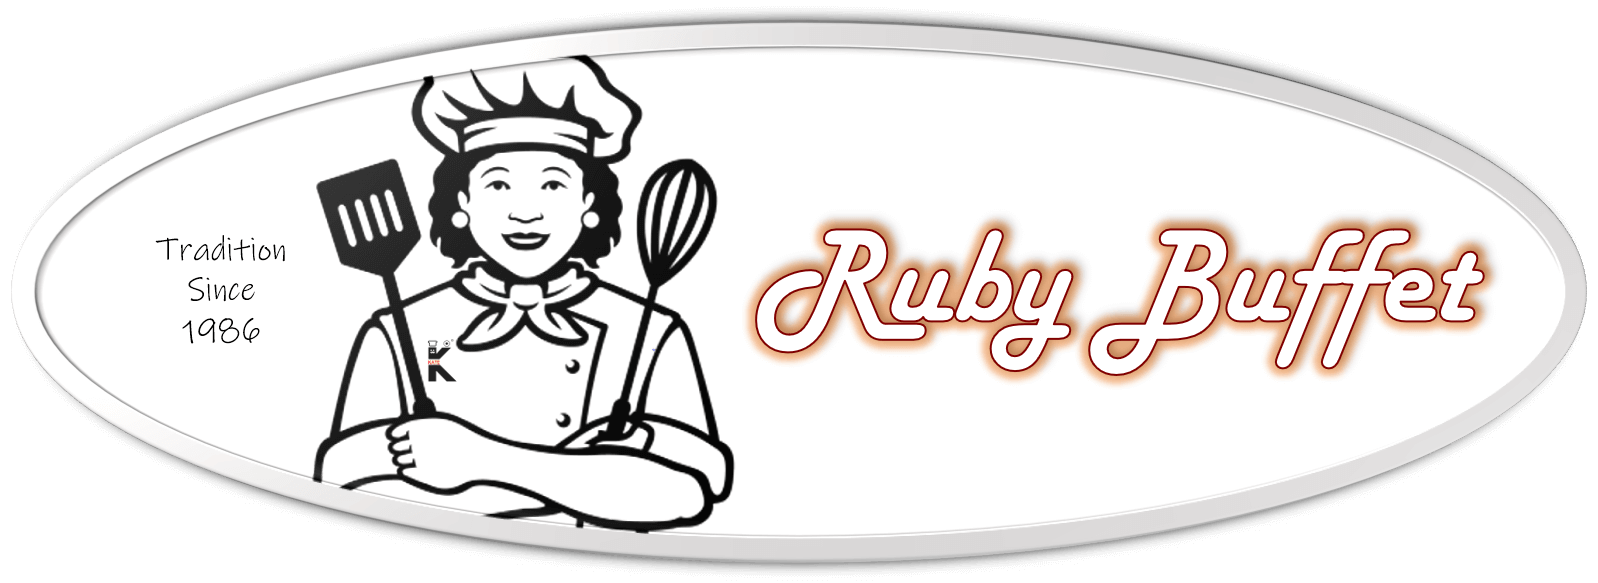 Ruby Buffet